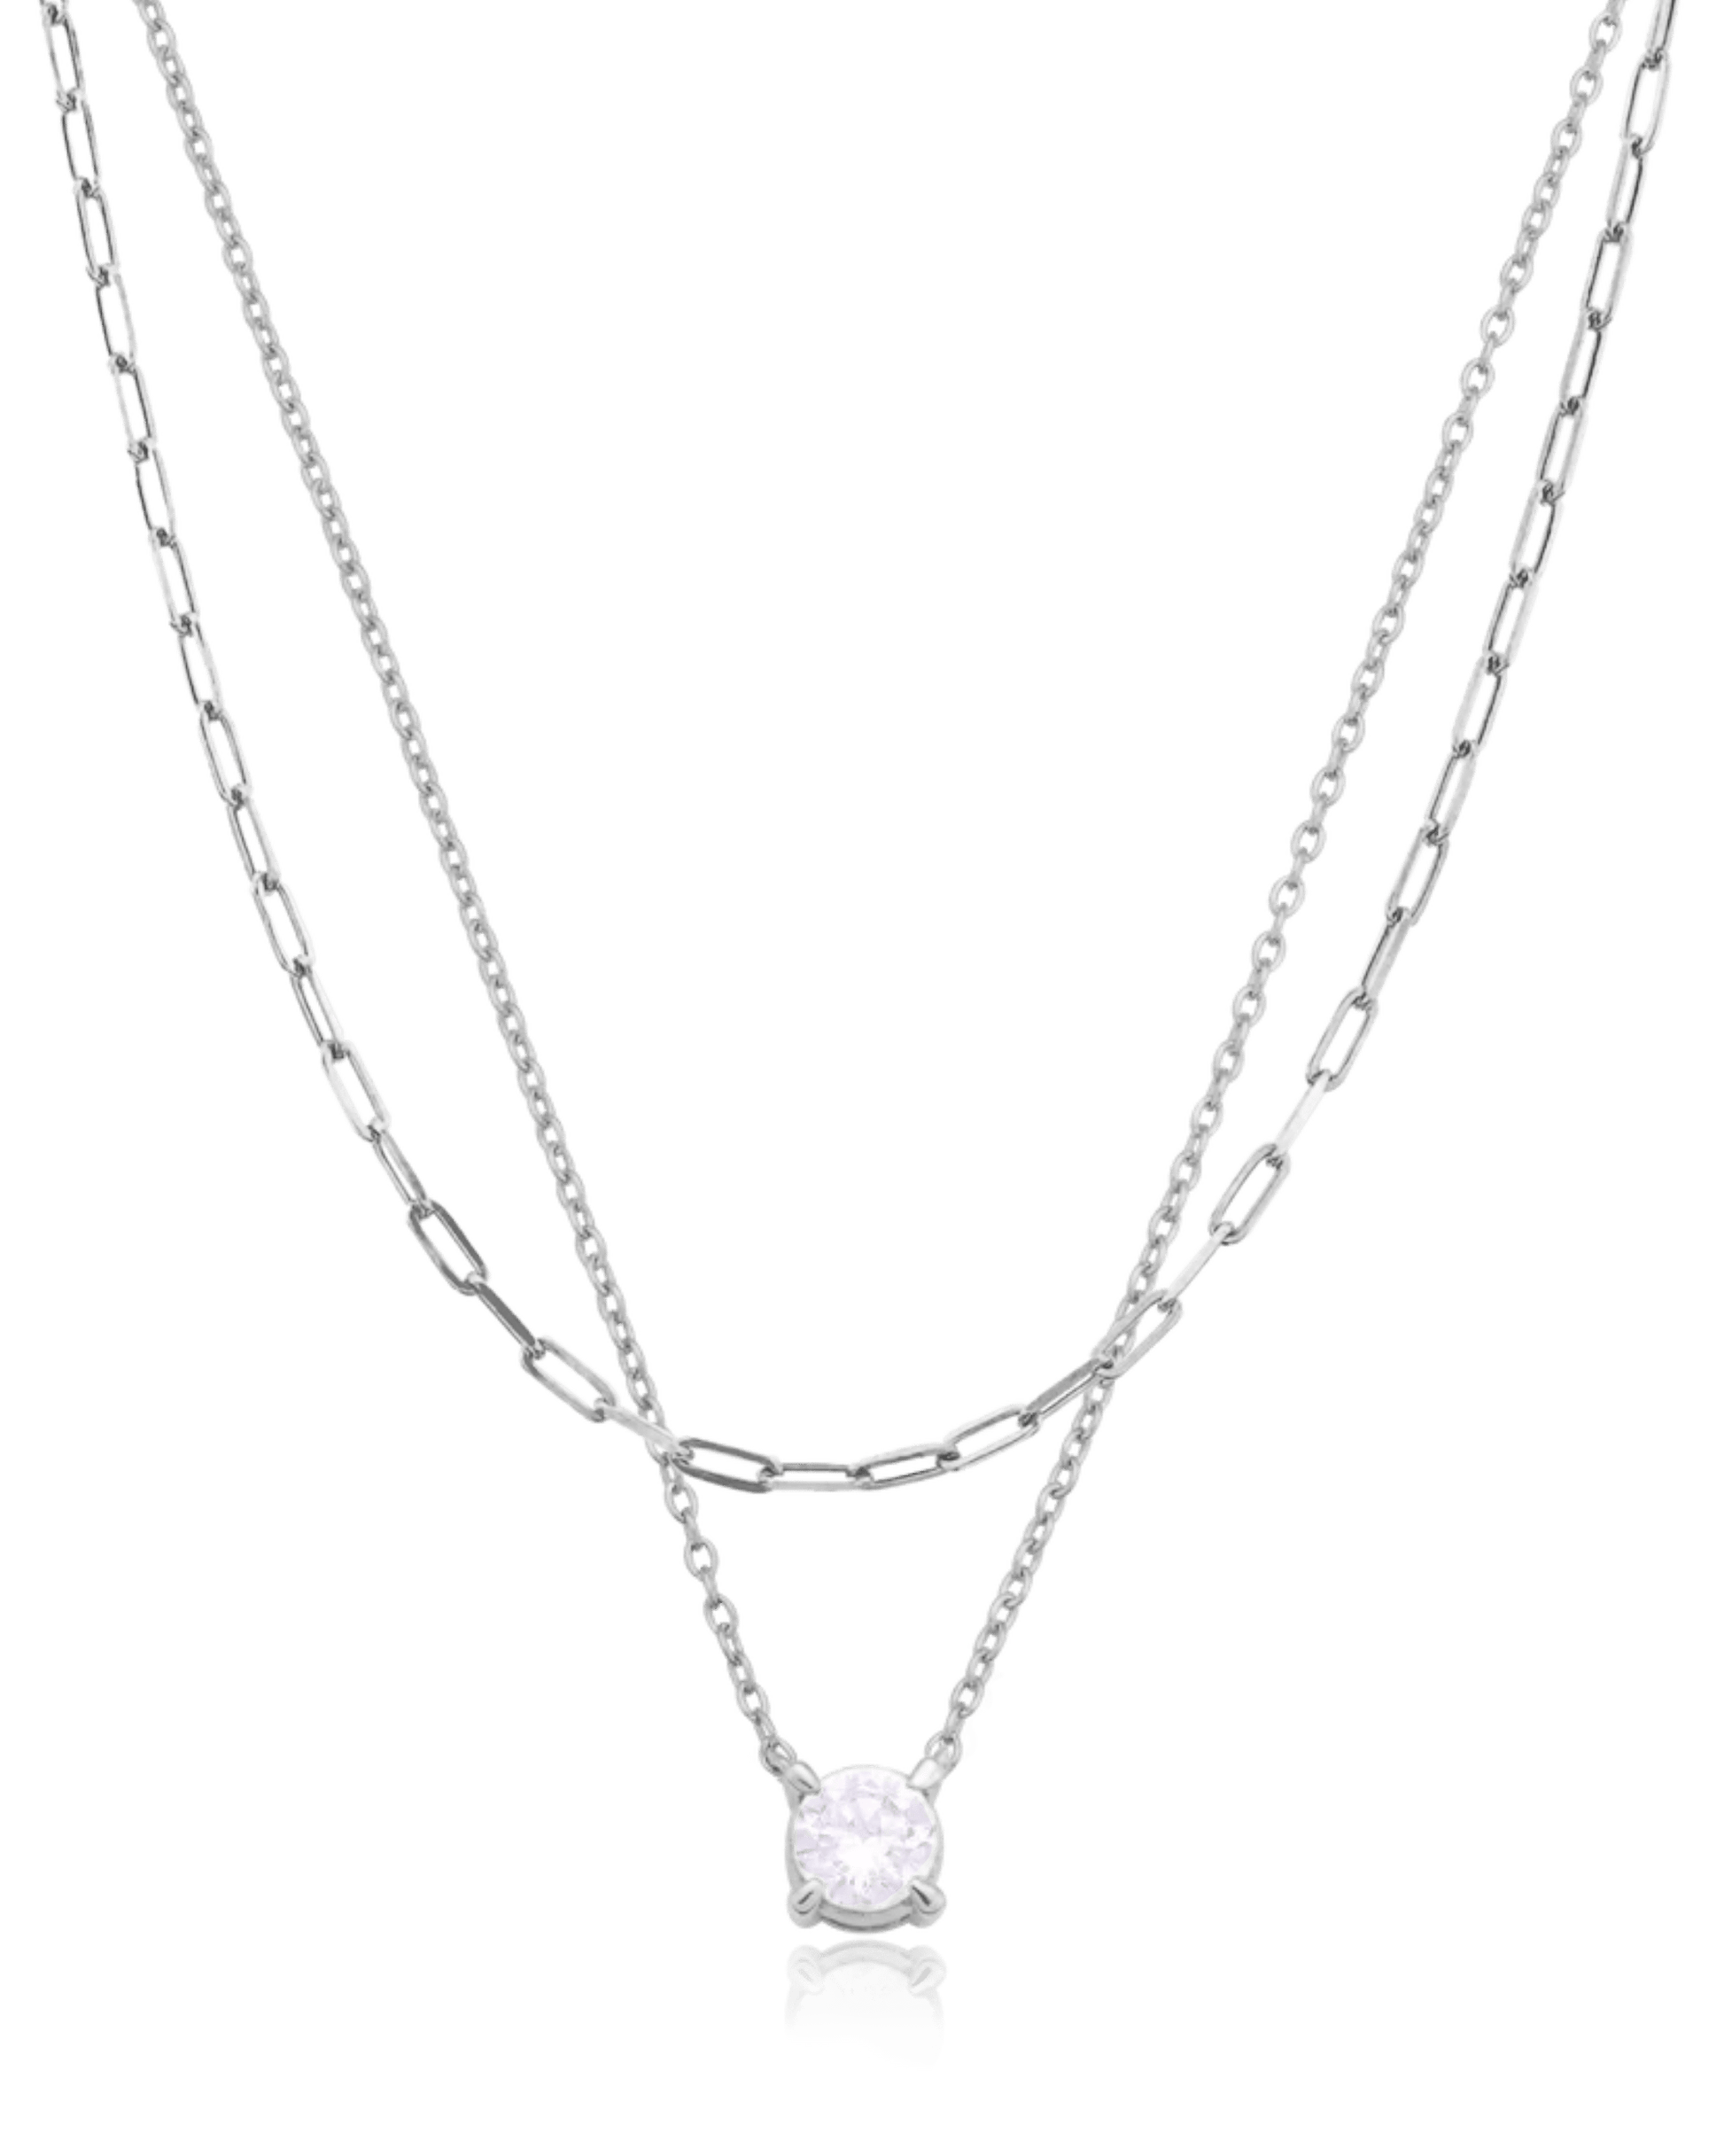 Set of Round Solitaire Diamond & Links Chain Necklaces - 18K Gold Vermeil Necklaces magal-dev 